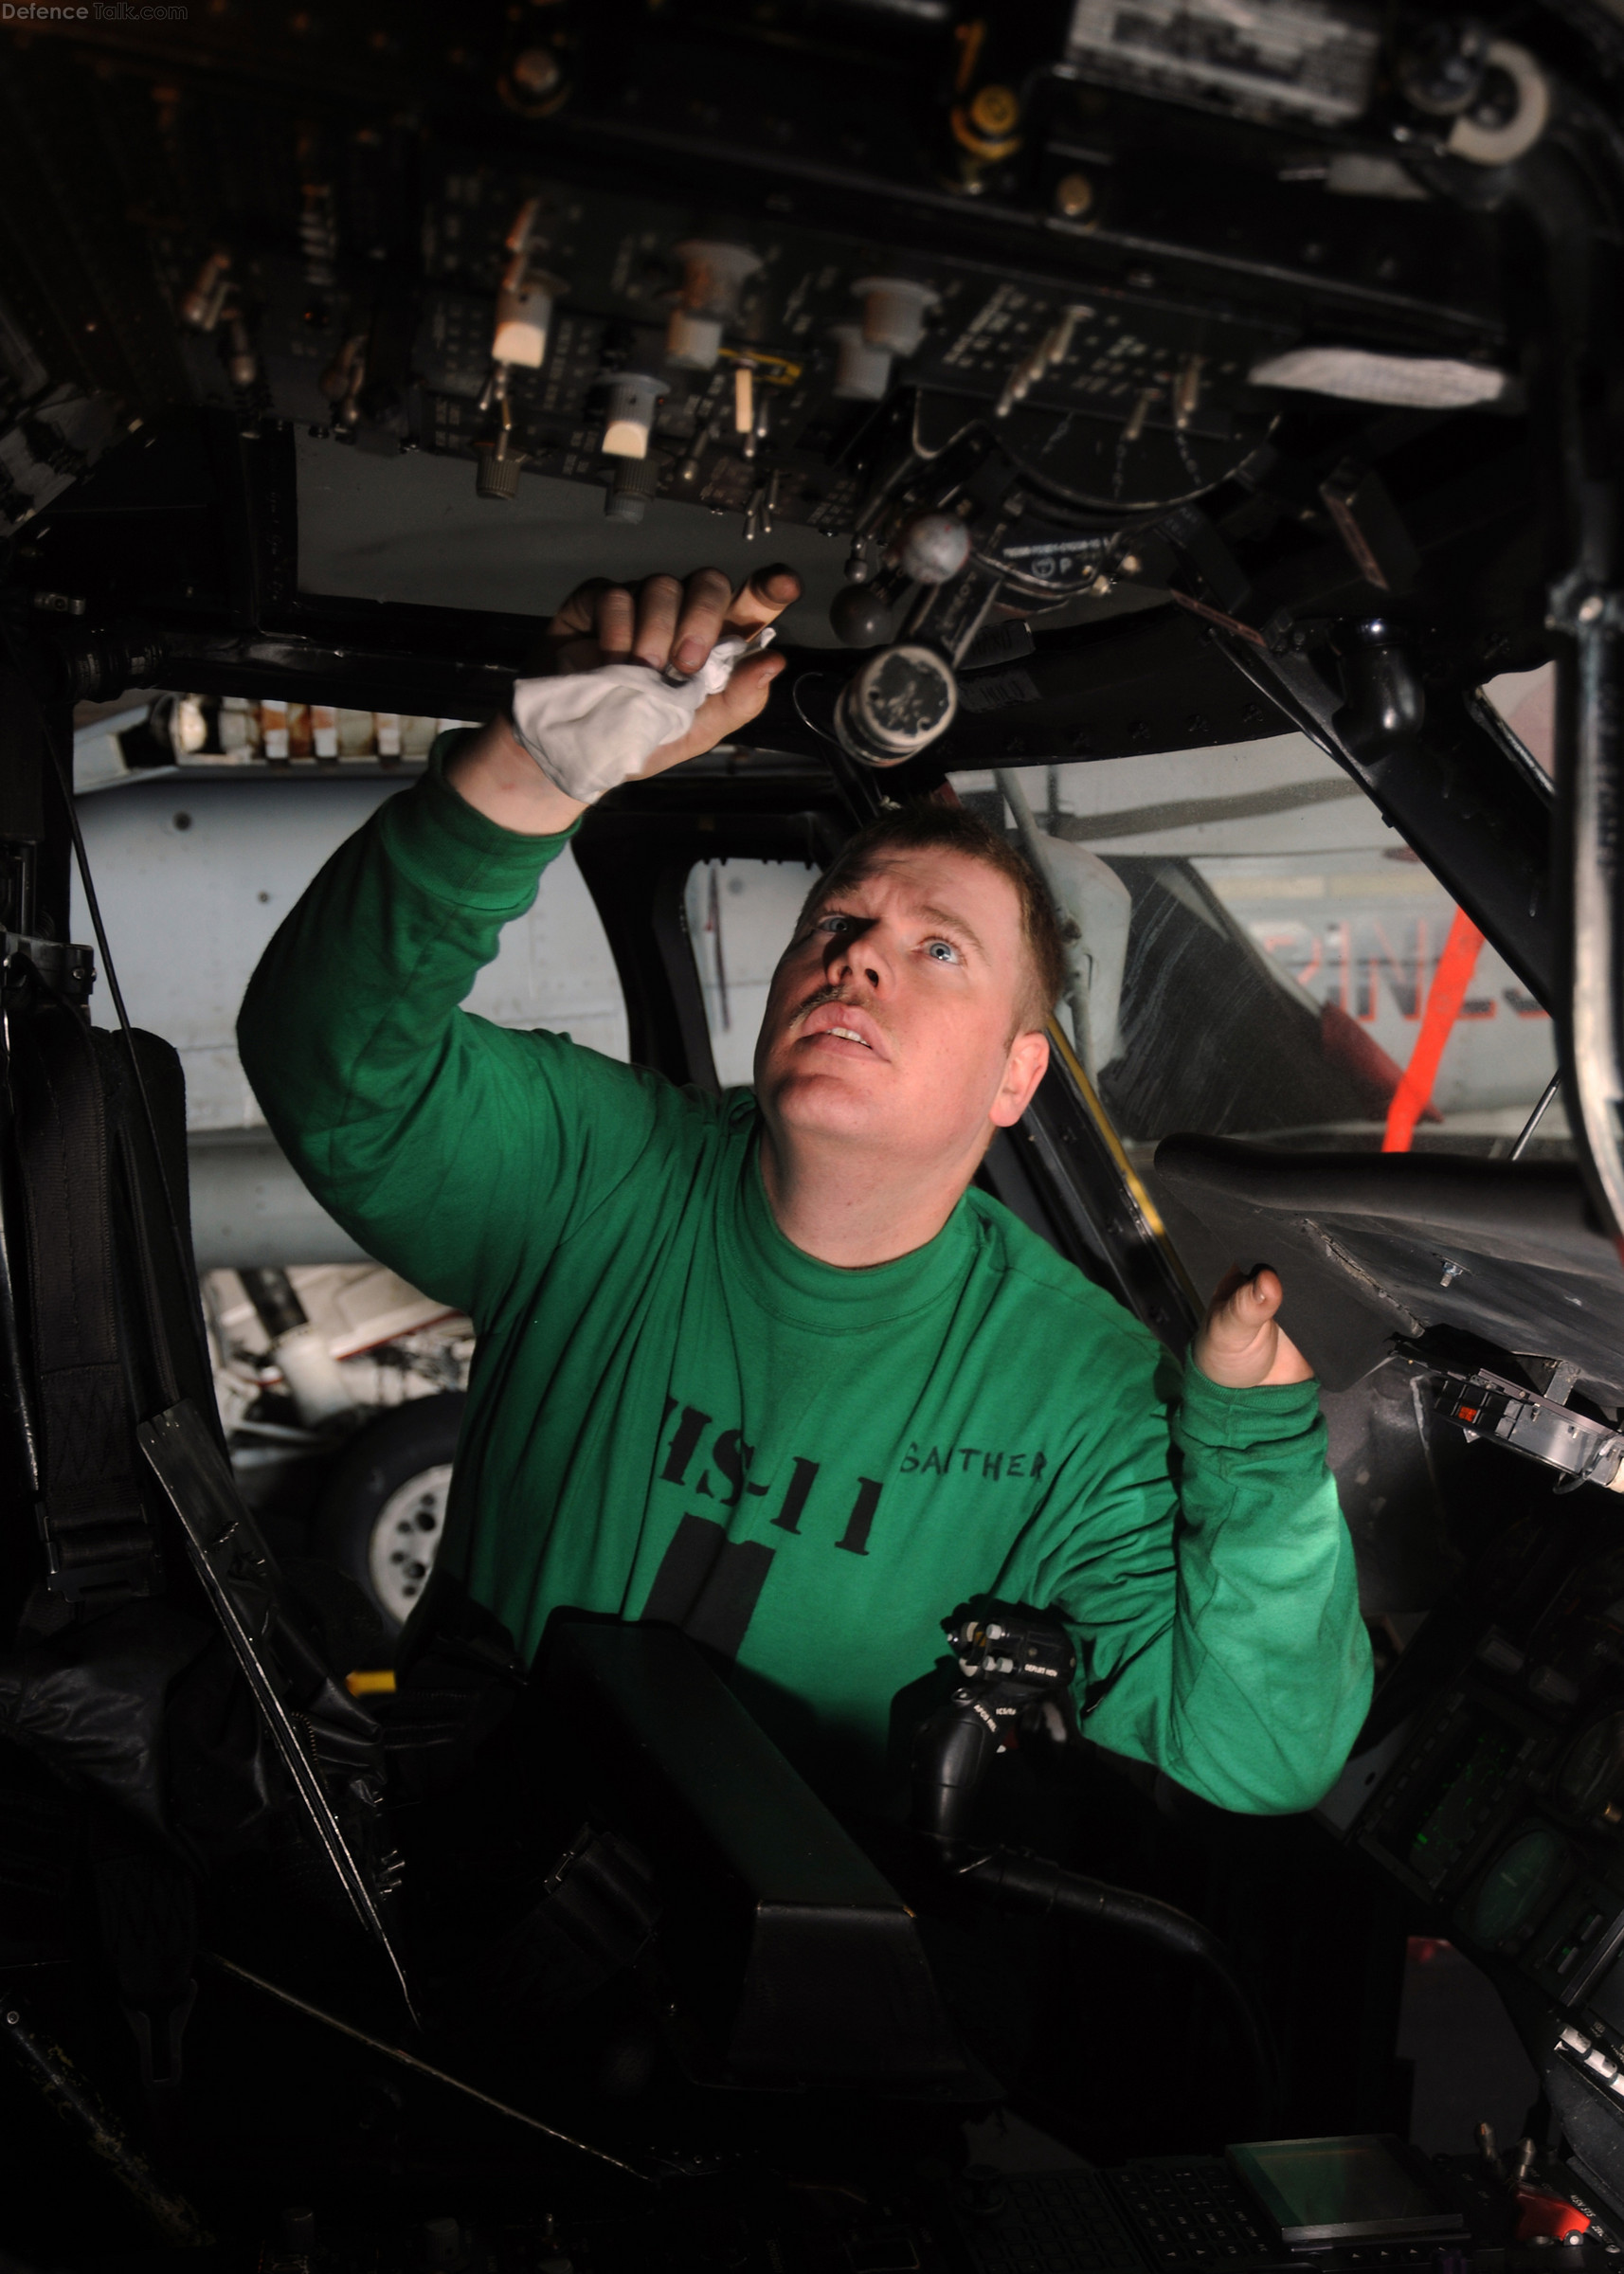 Navy aviation electronics technician civilian jobs